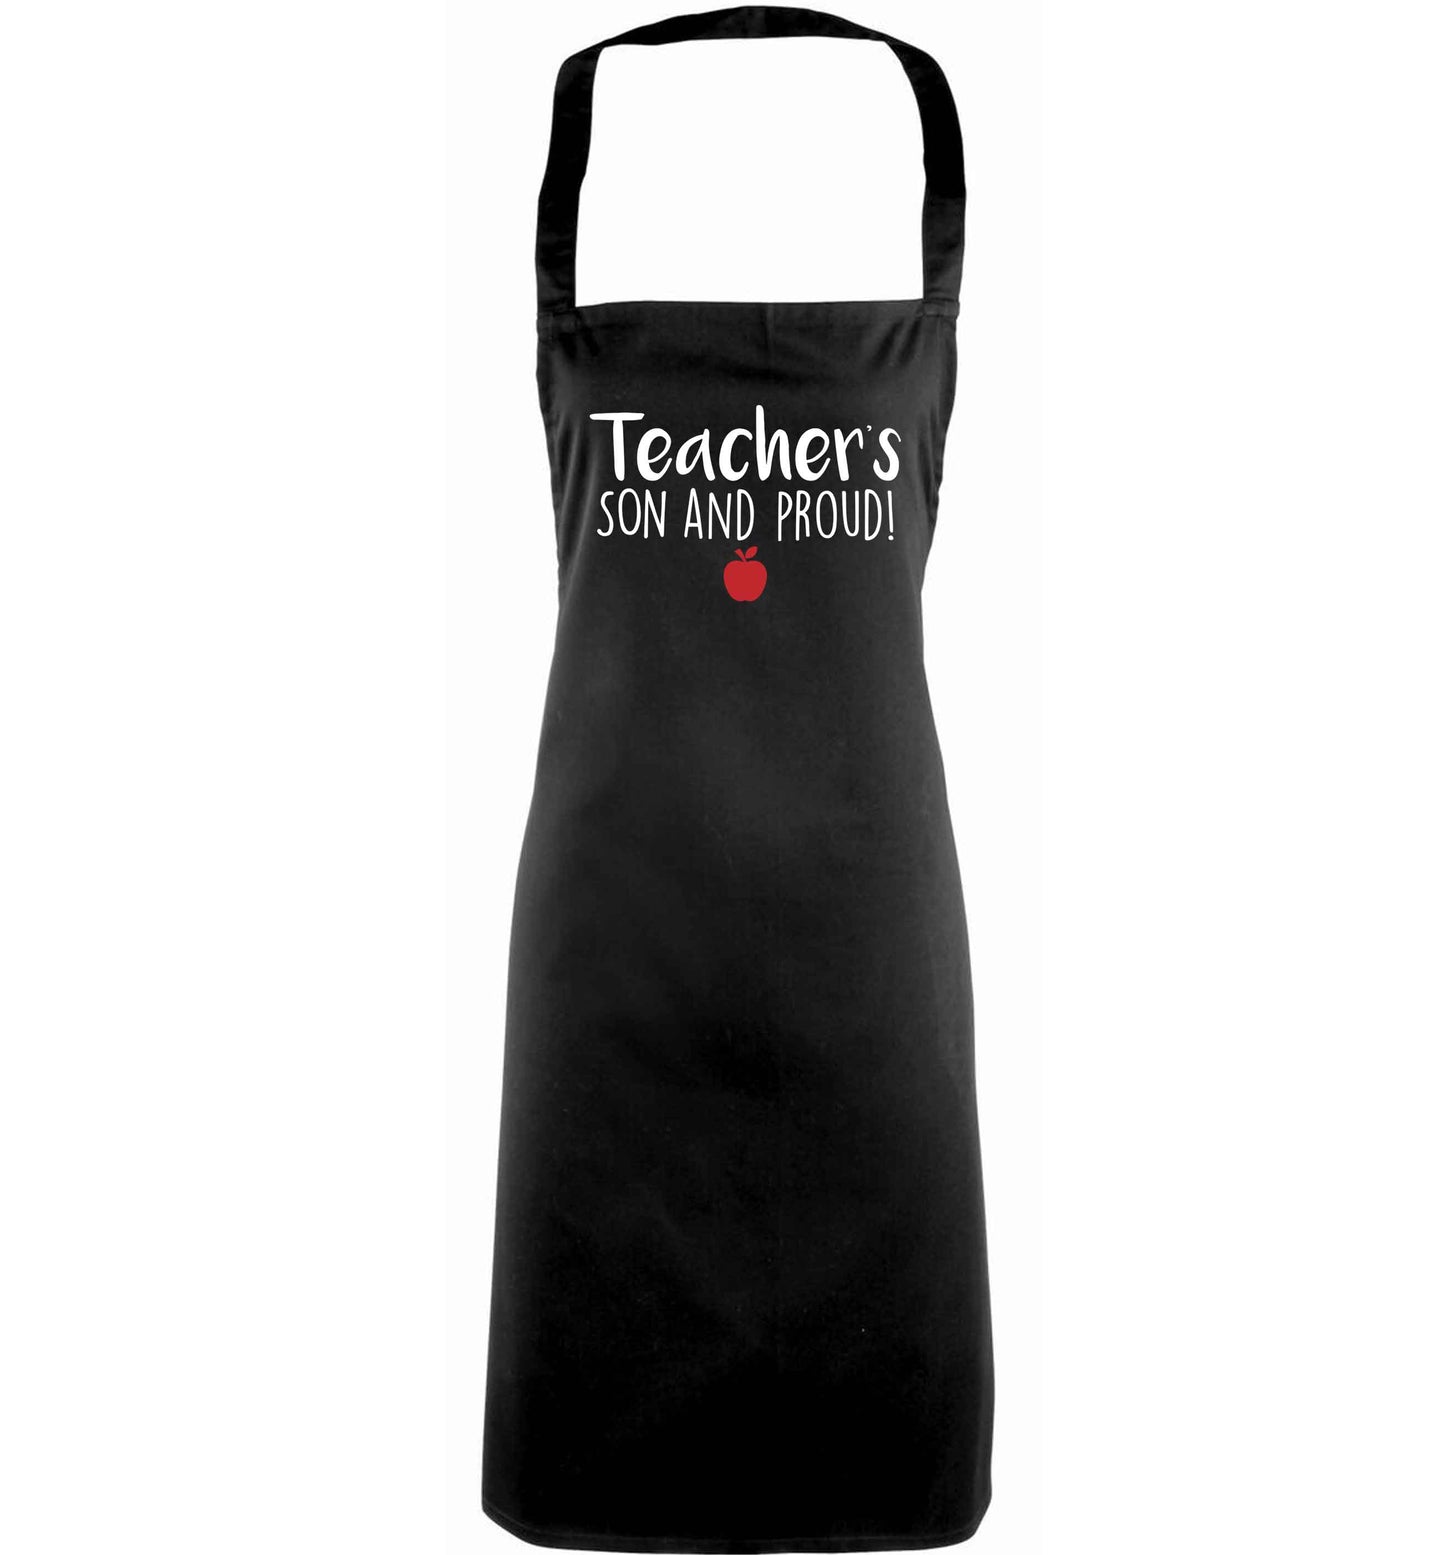 Teachers son and proud adults black apron